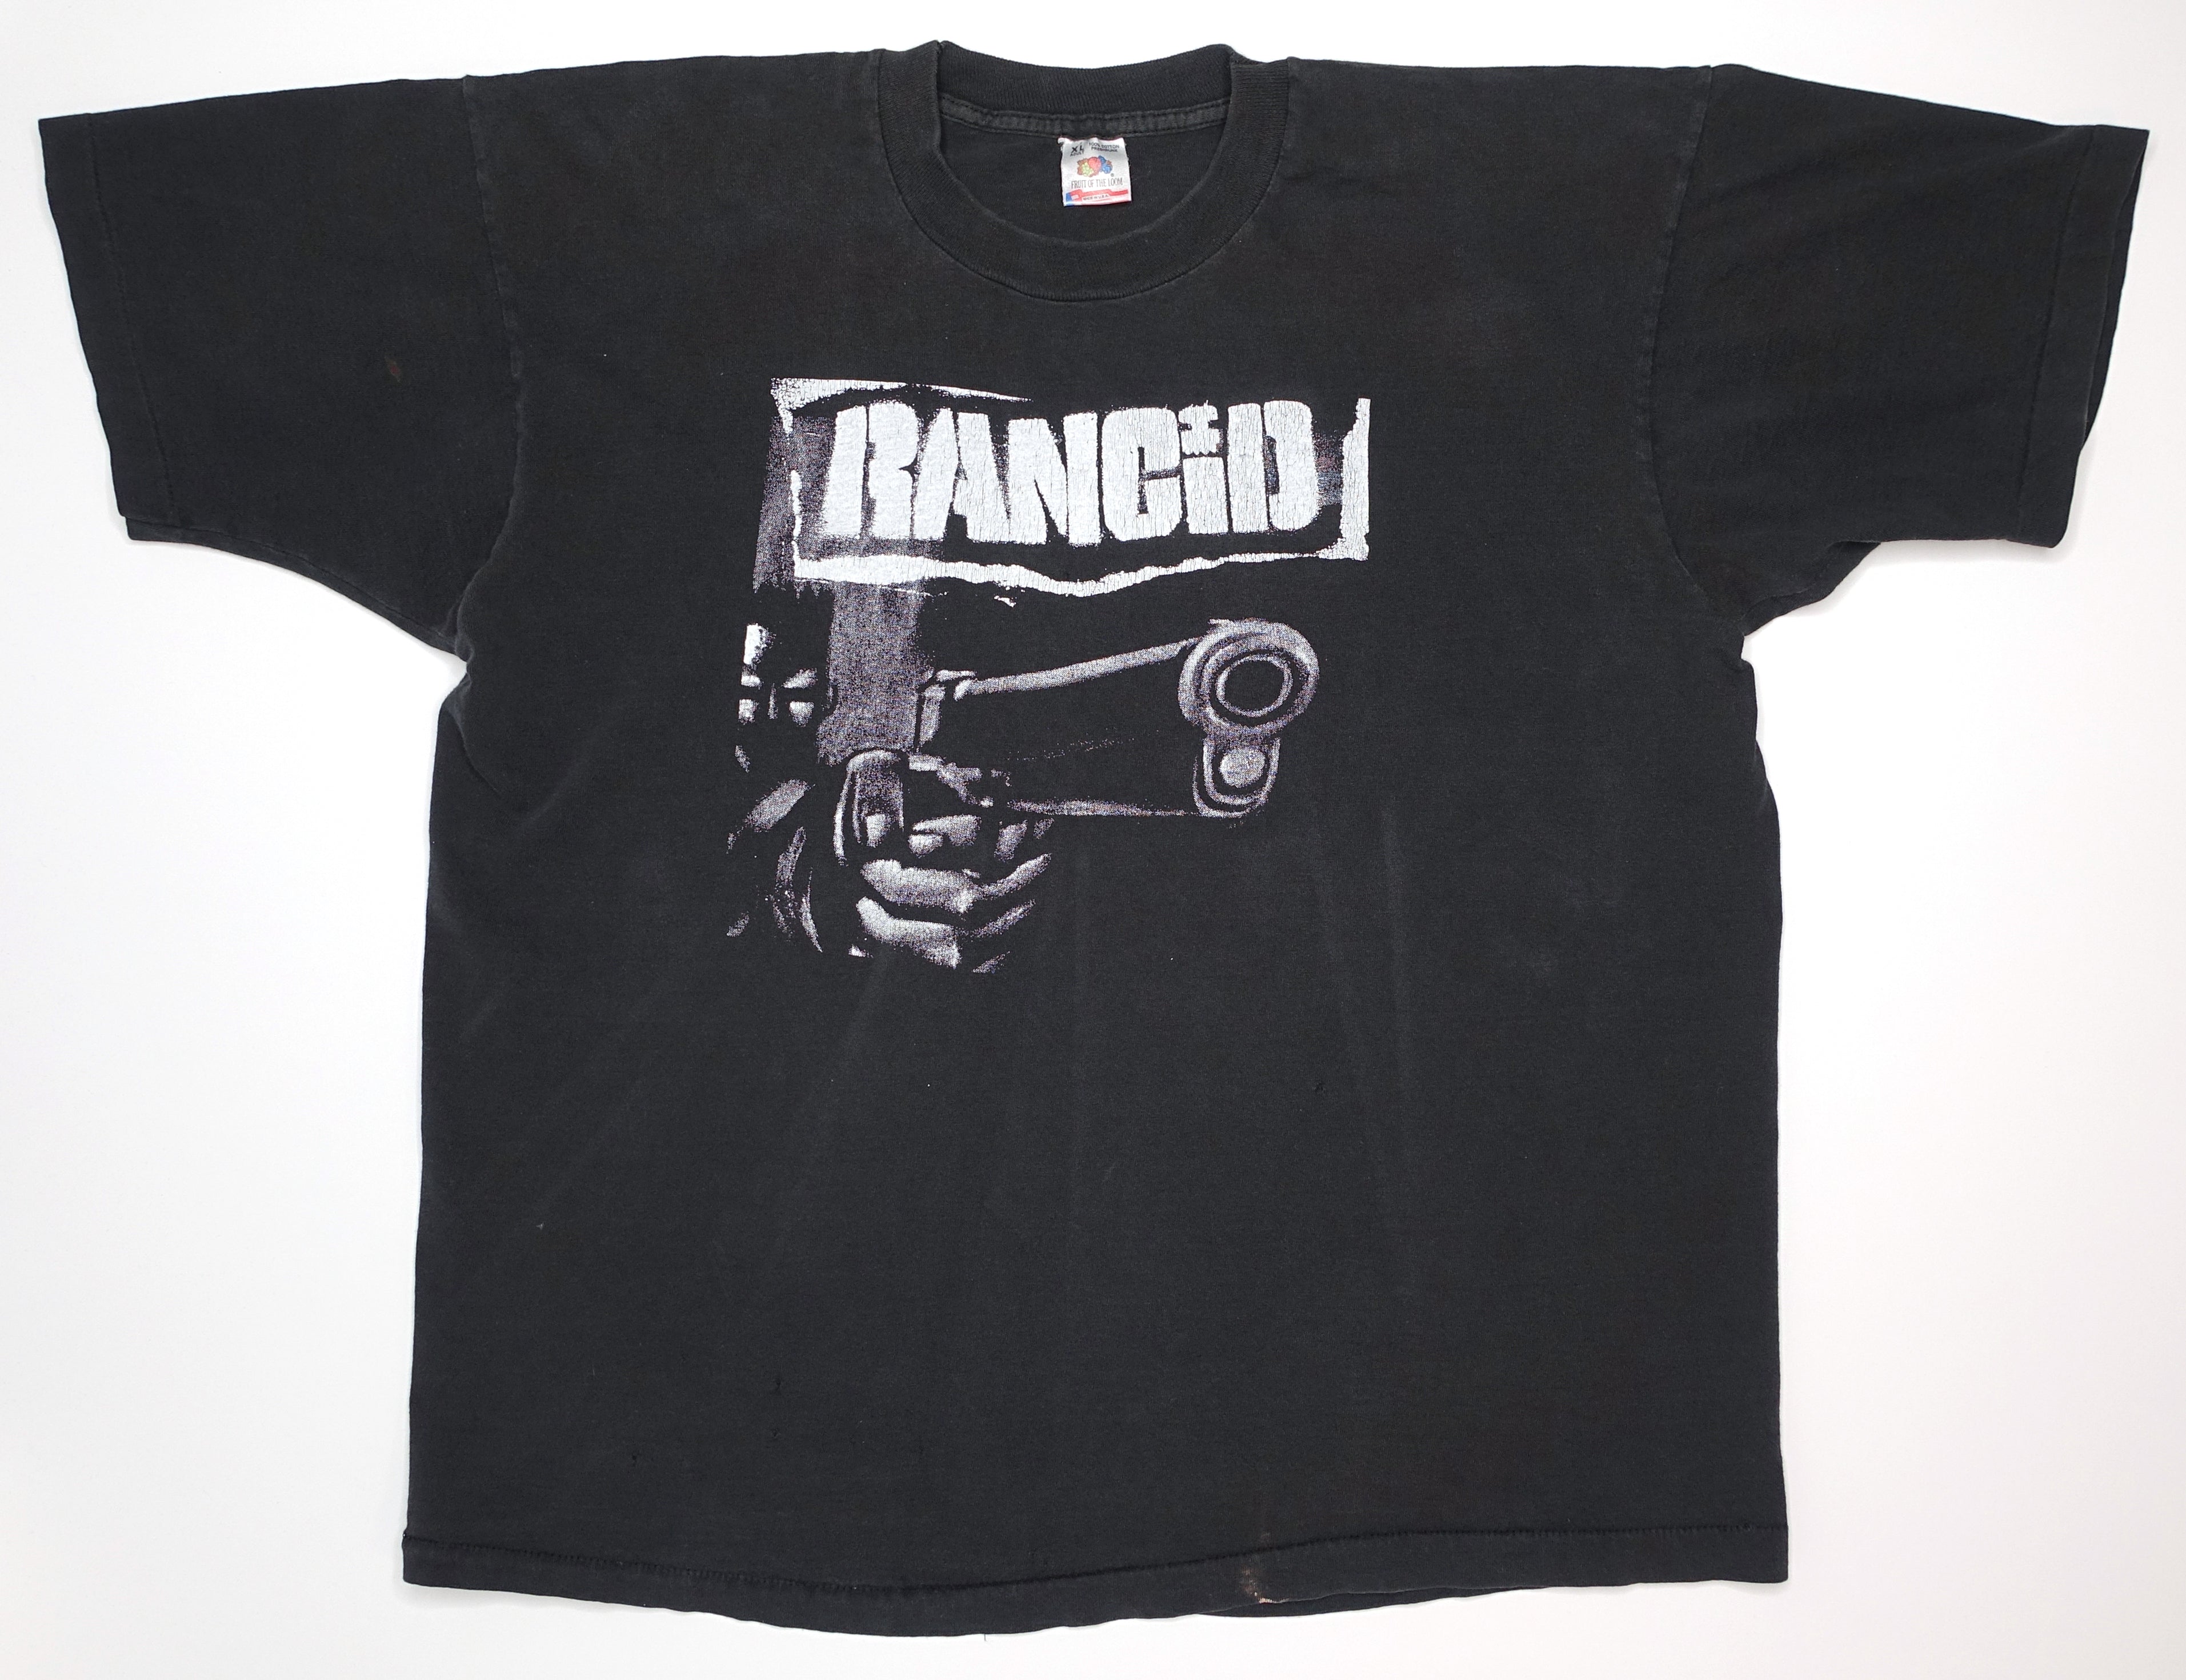 Rancid - Rancid S/T 1993 Tour Shirt Size XL